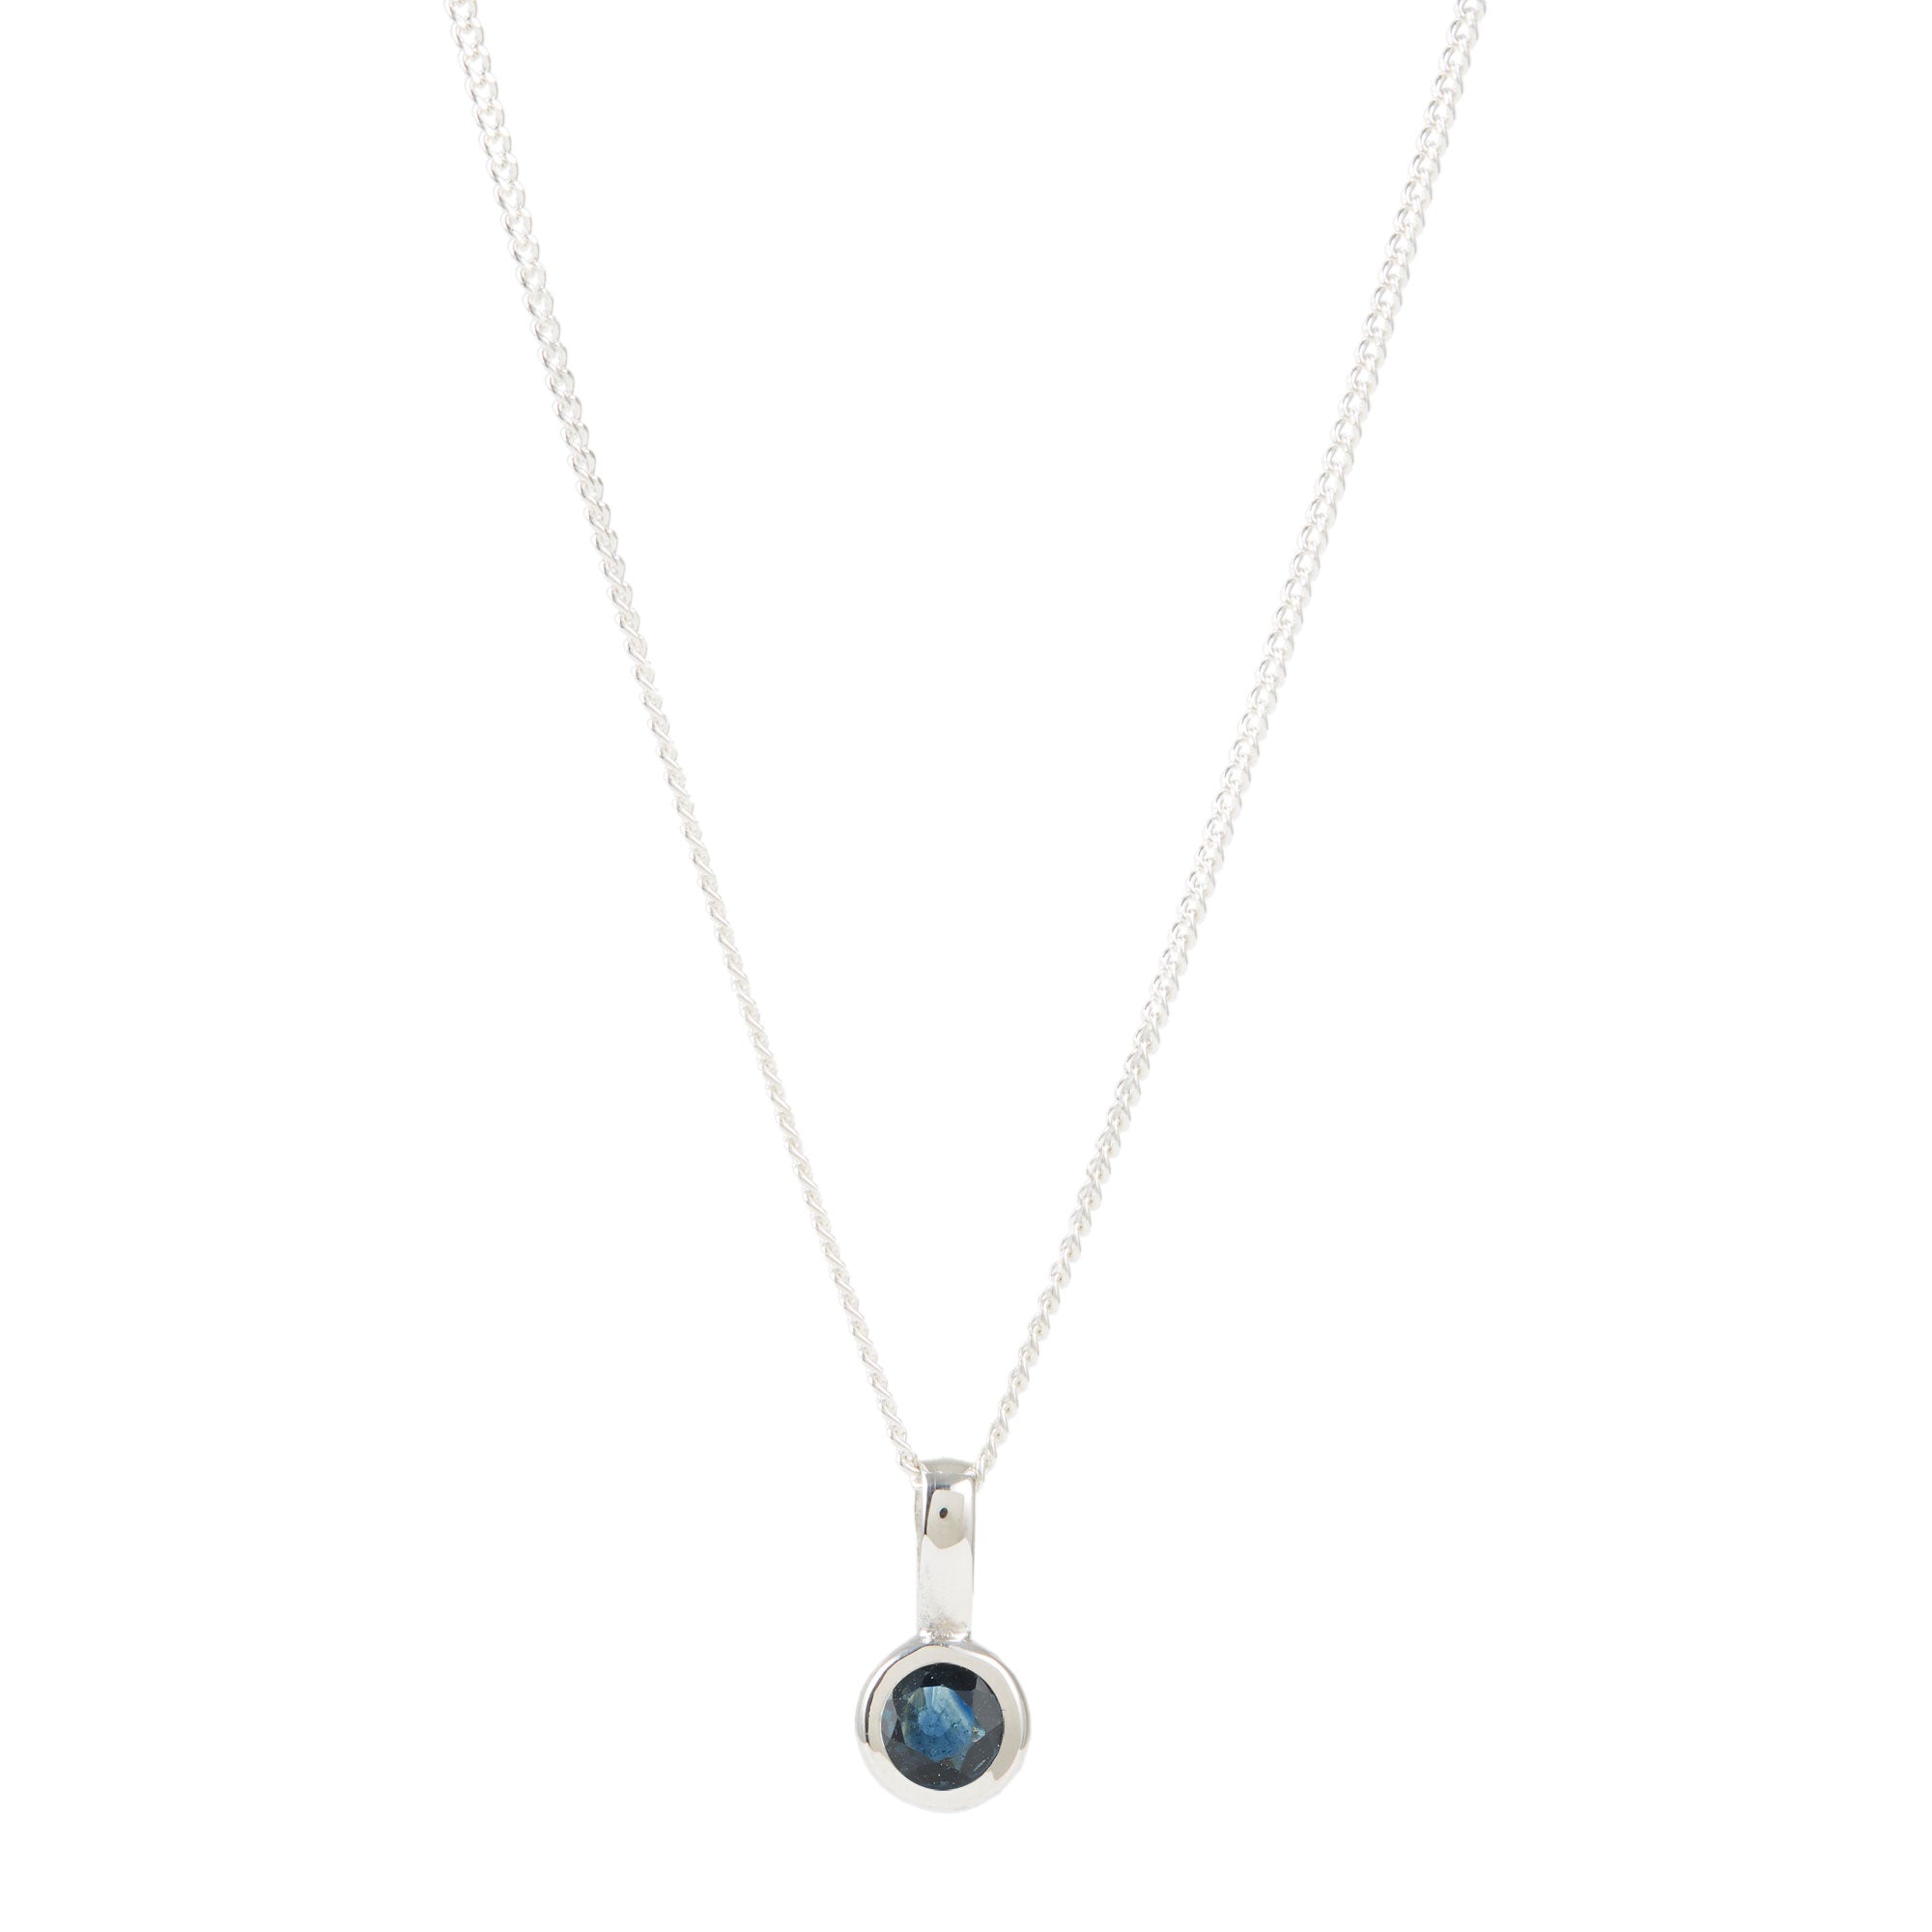 September Birthstone Charm Necklace - Sapphire